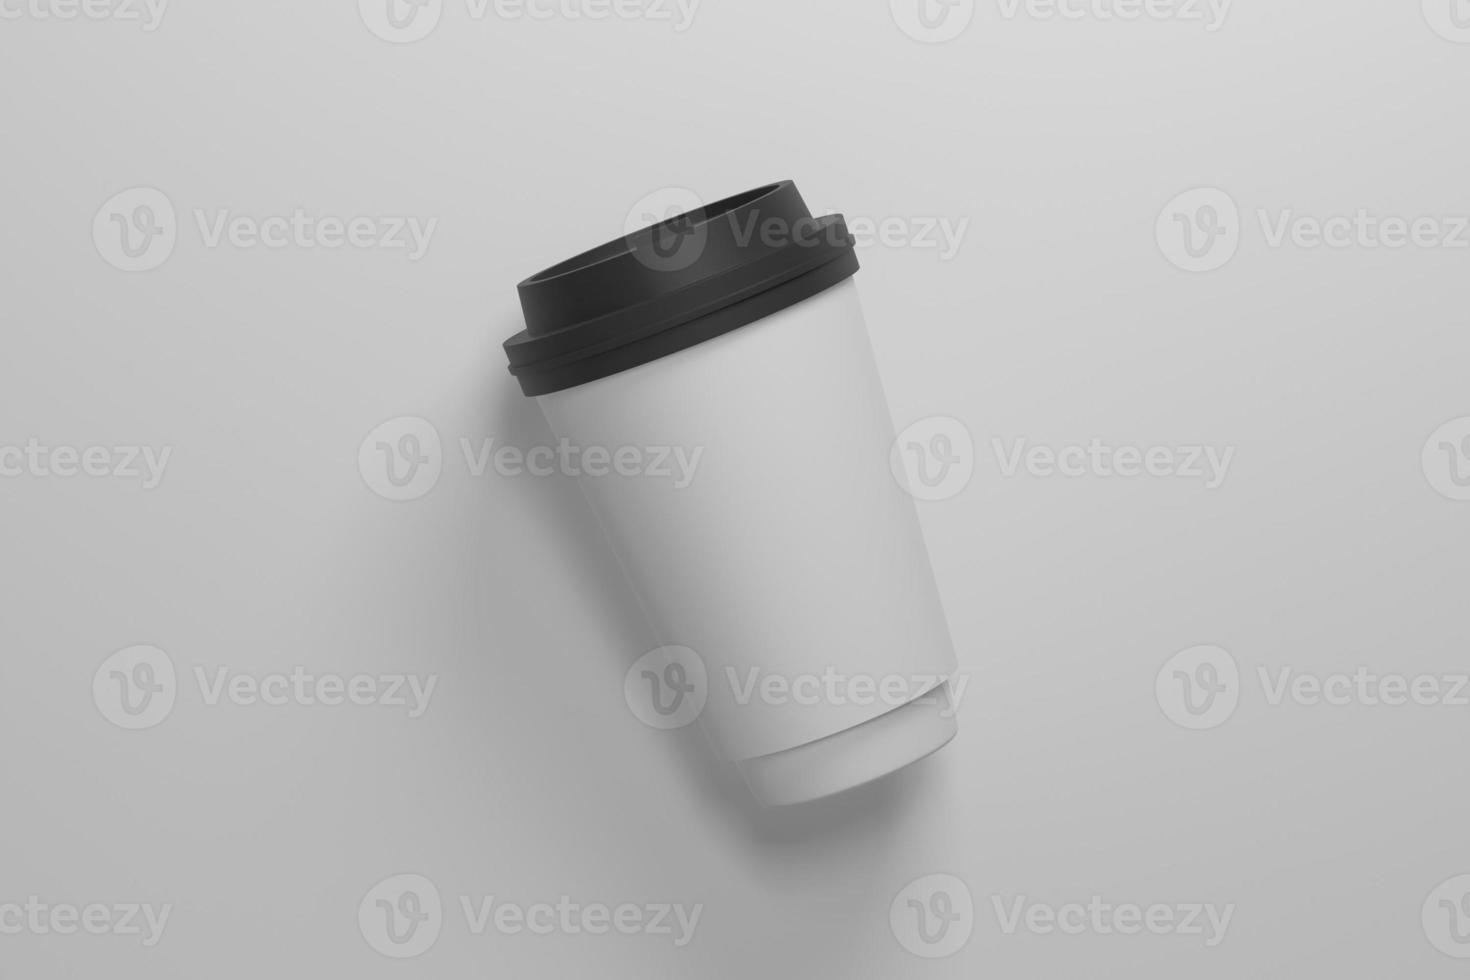 taza de café de papel realista aislada foto